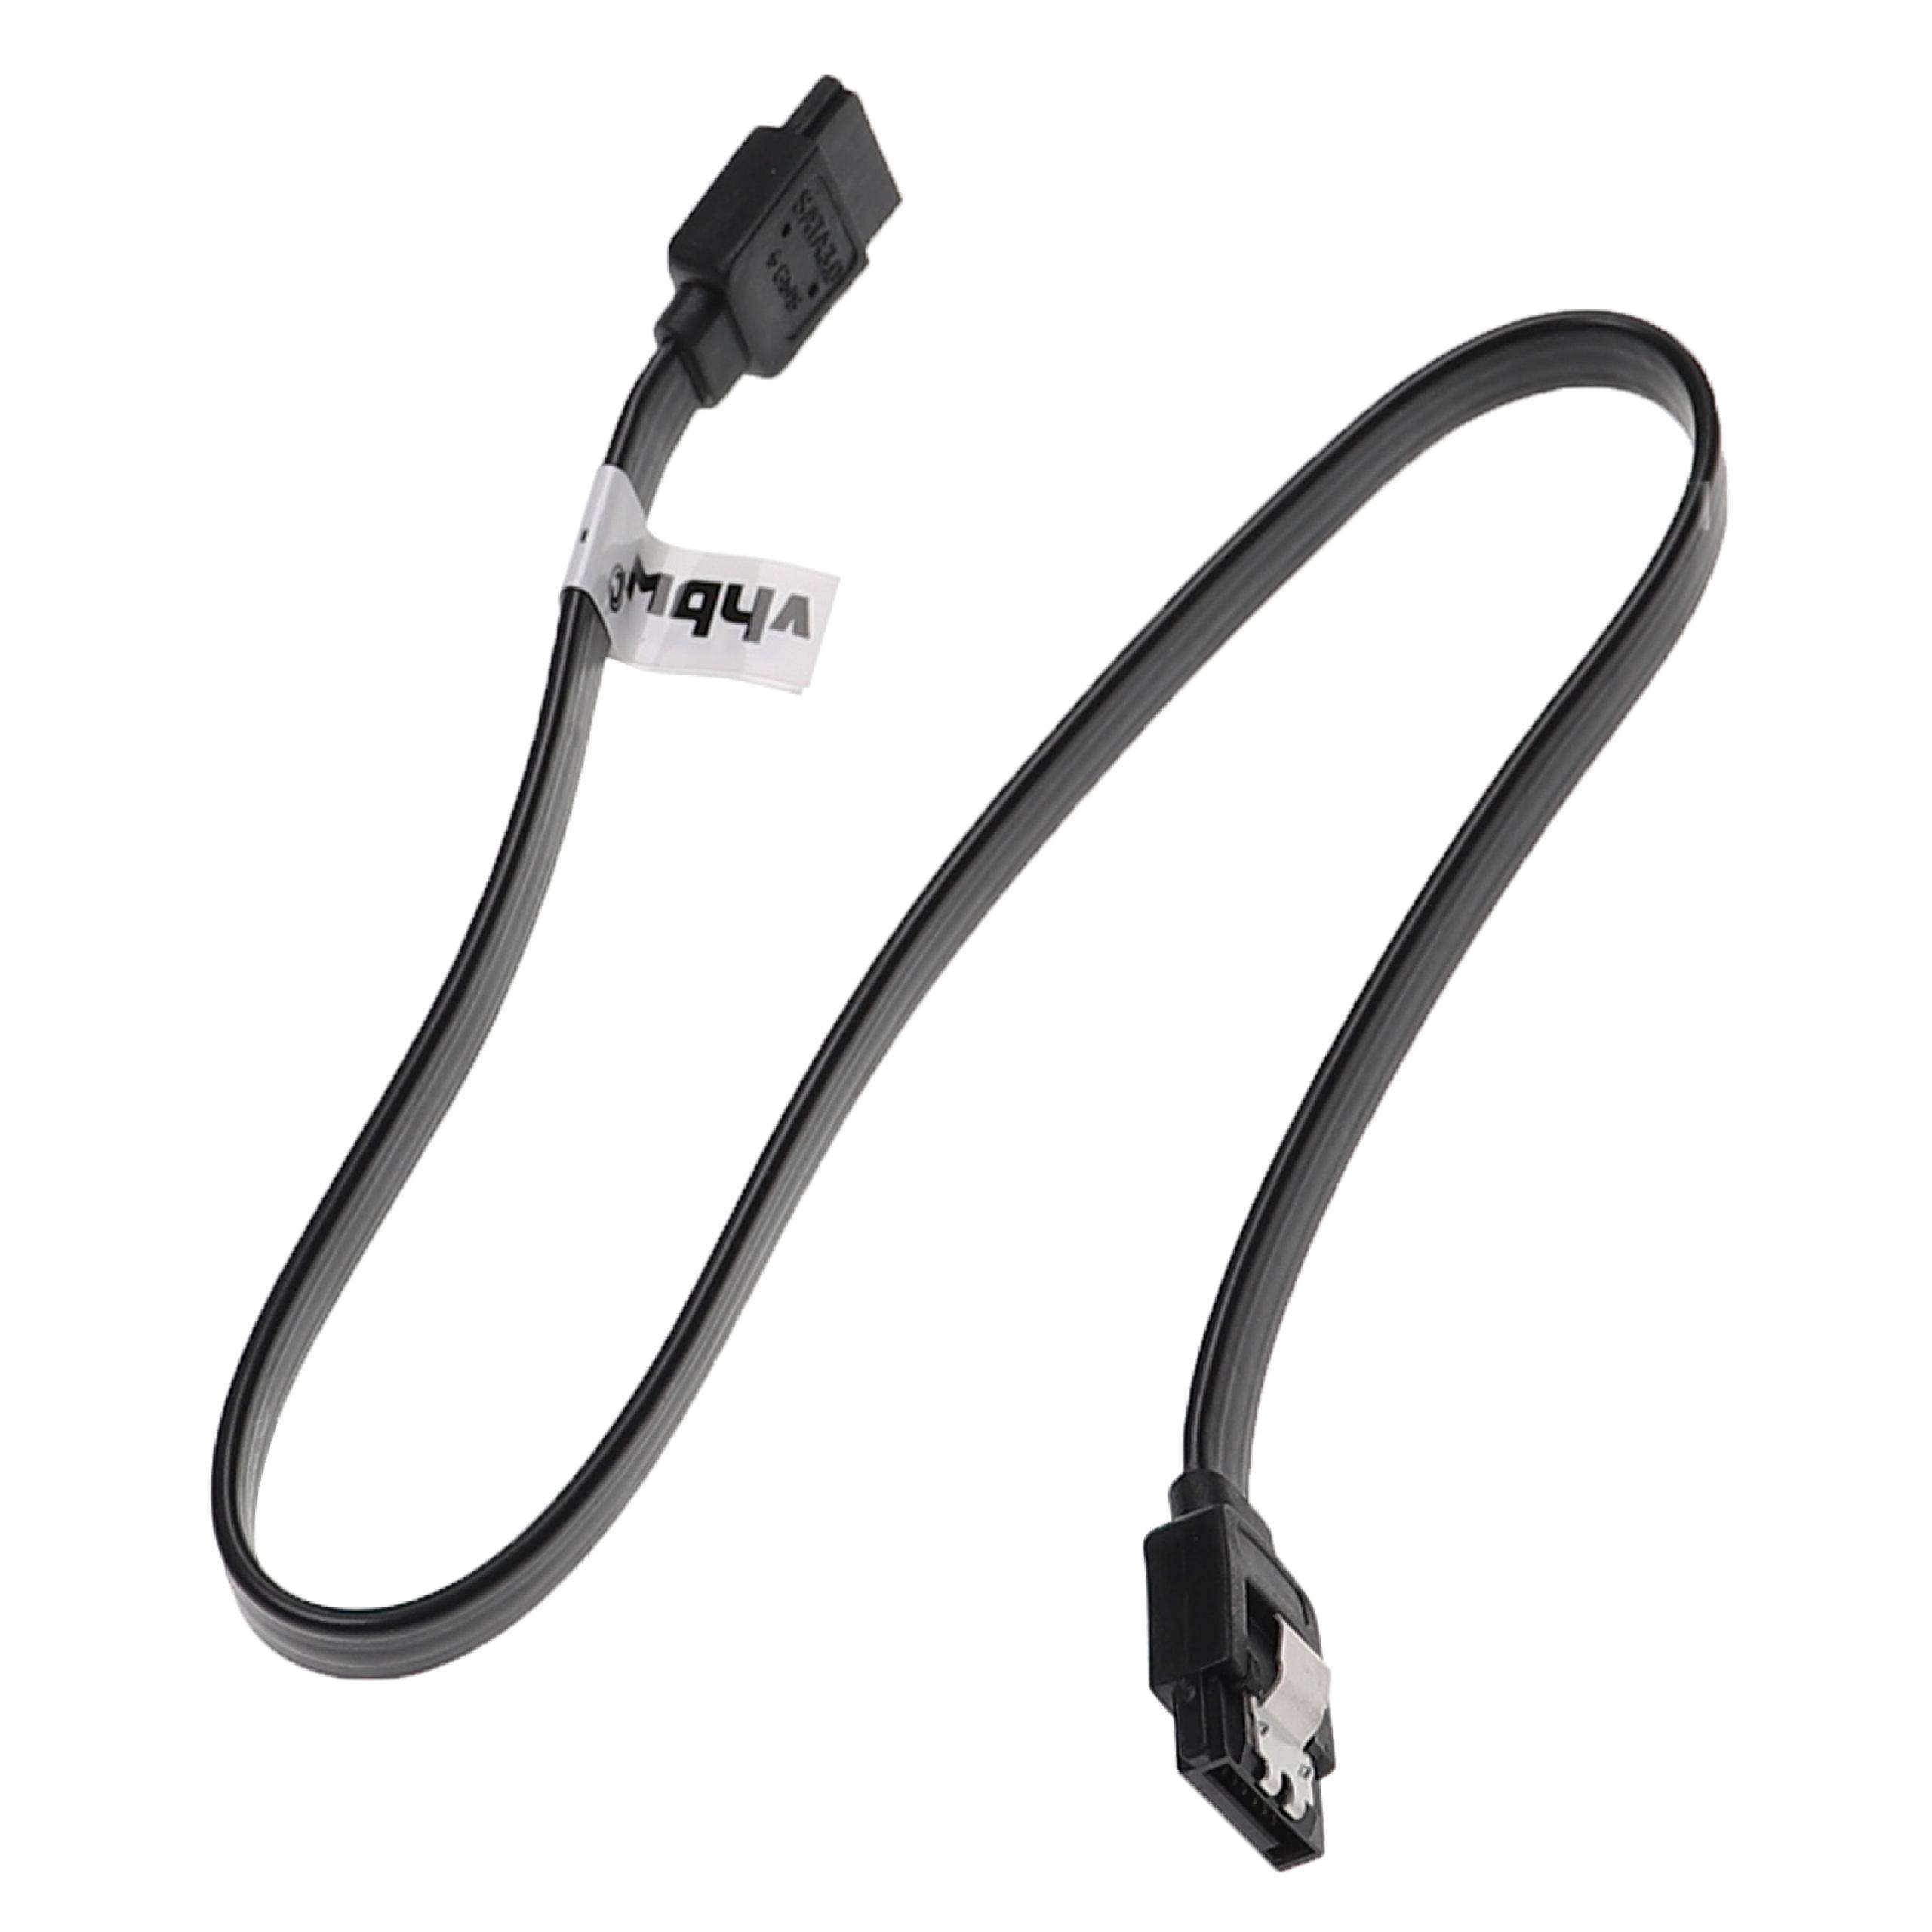 Cable SATA recto - recto compatible con discos duros - Cable de datos, 40 cm